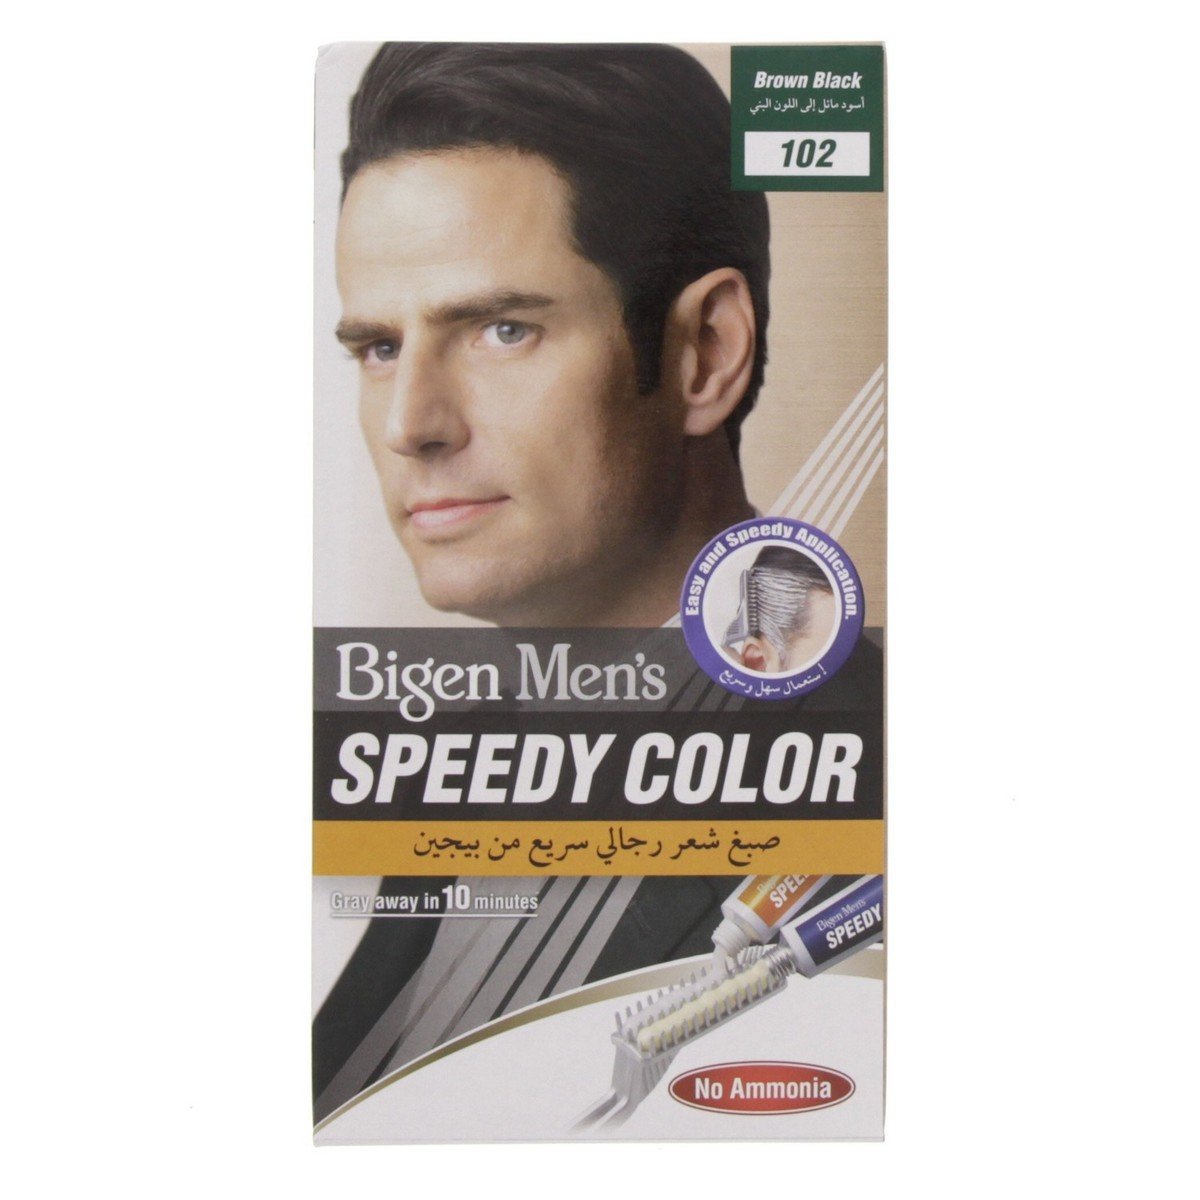 Bigens Men's Speedy Color Brown Black 102 1pkt